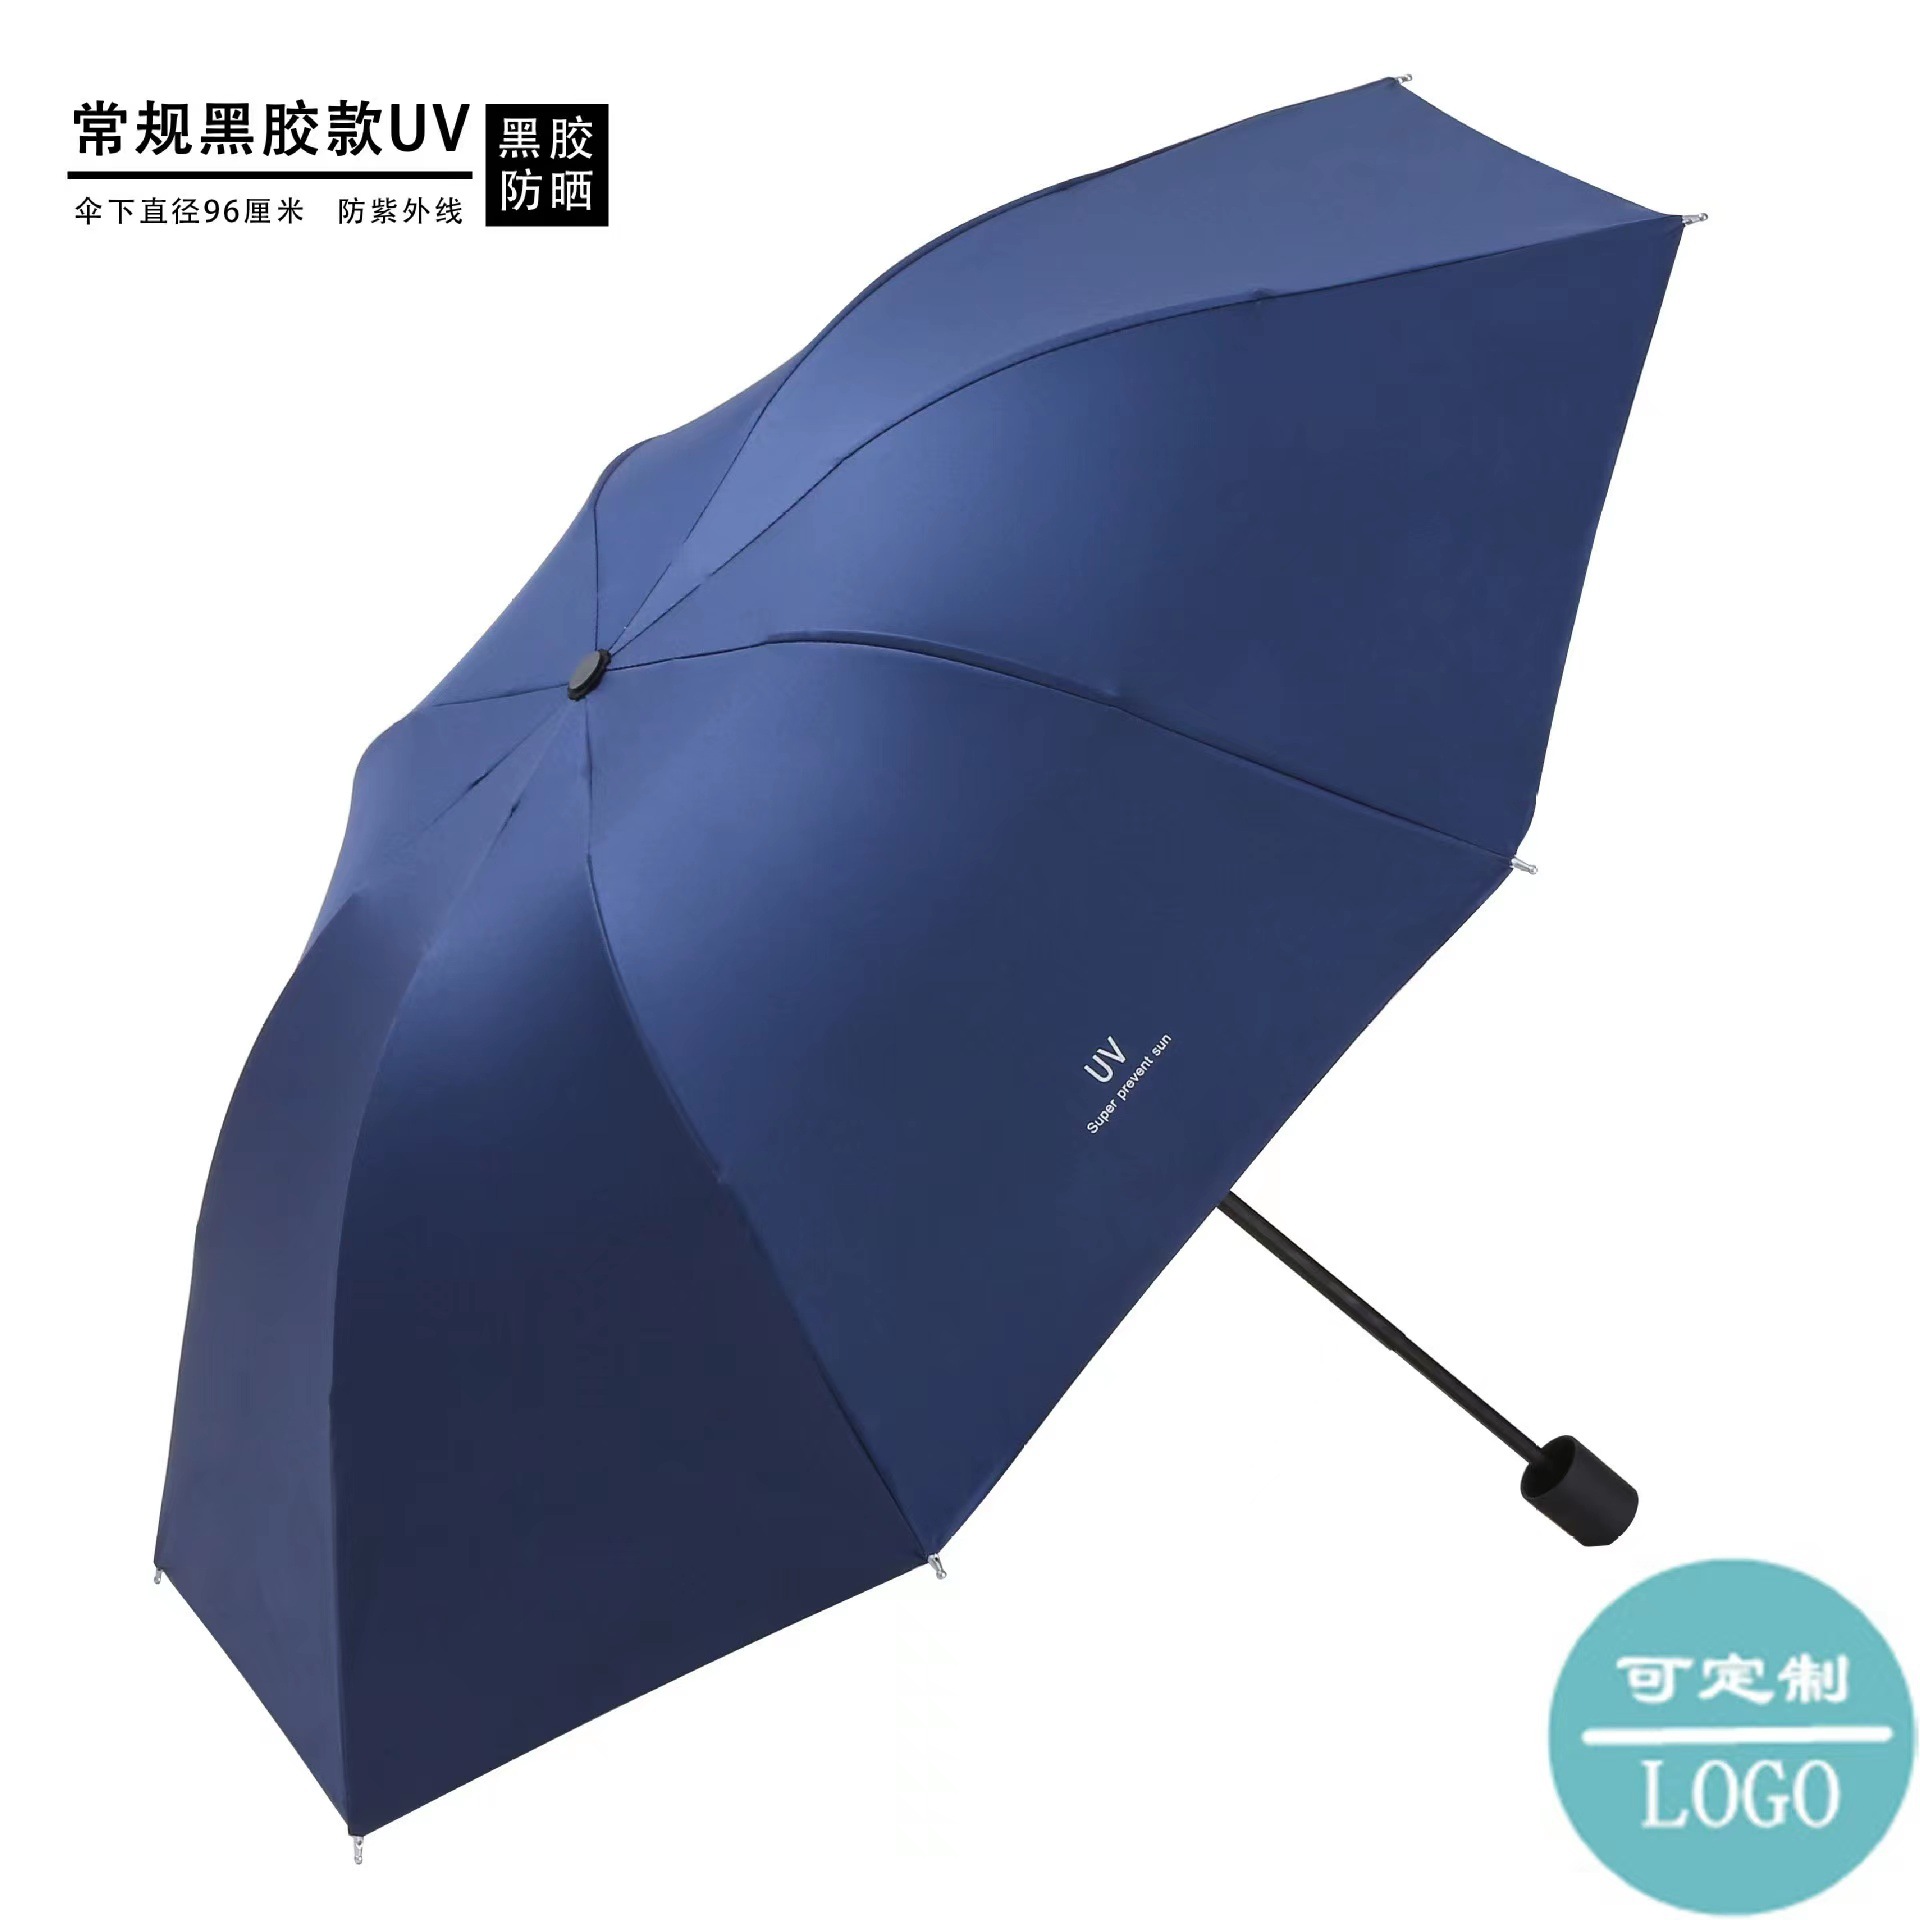 Full-Automatic Uv Vinyl Umbrella Triple Folding Umbrella Rain Dual-Use Sun Umbrella Sun Umbrella Gift Advertising Umbrella Printing Logo